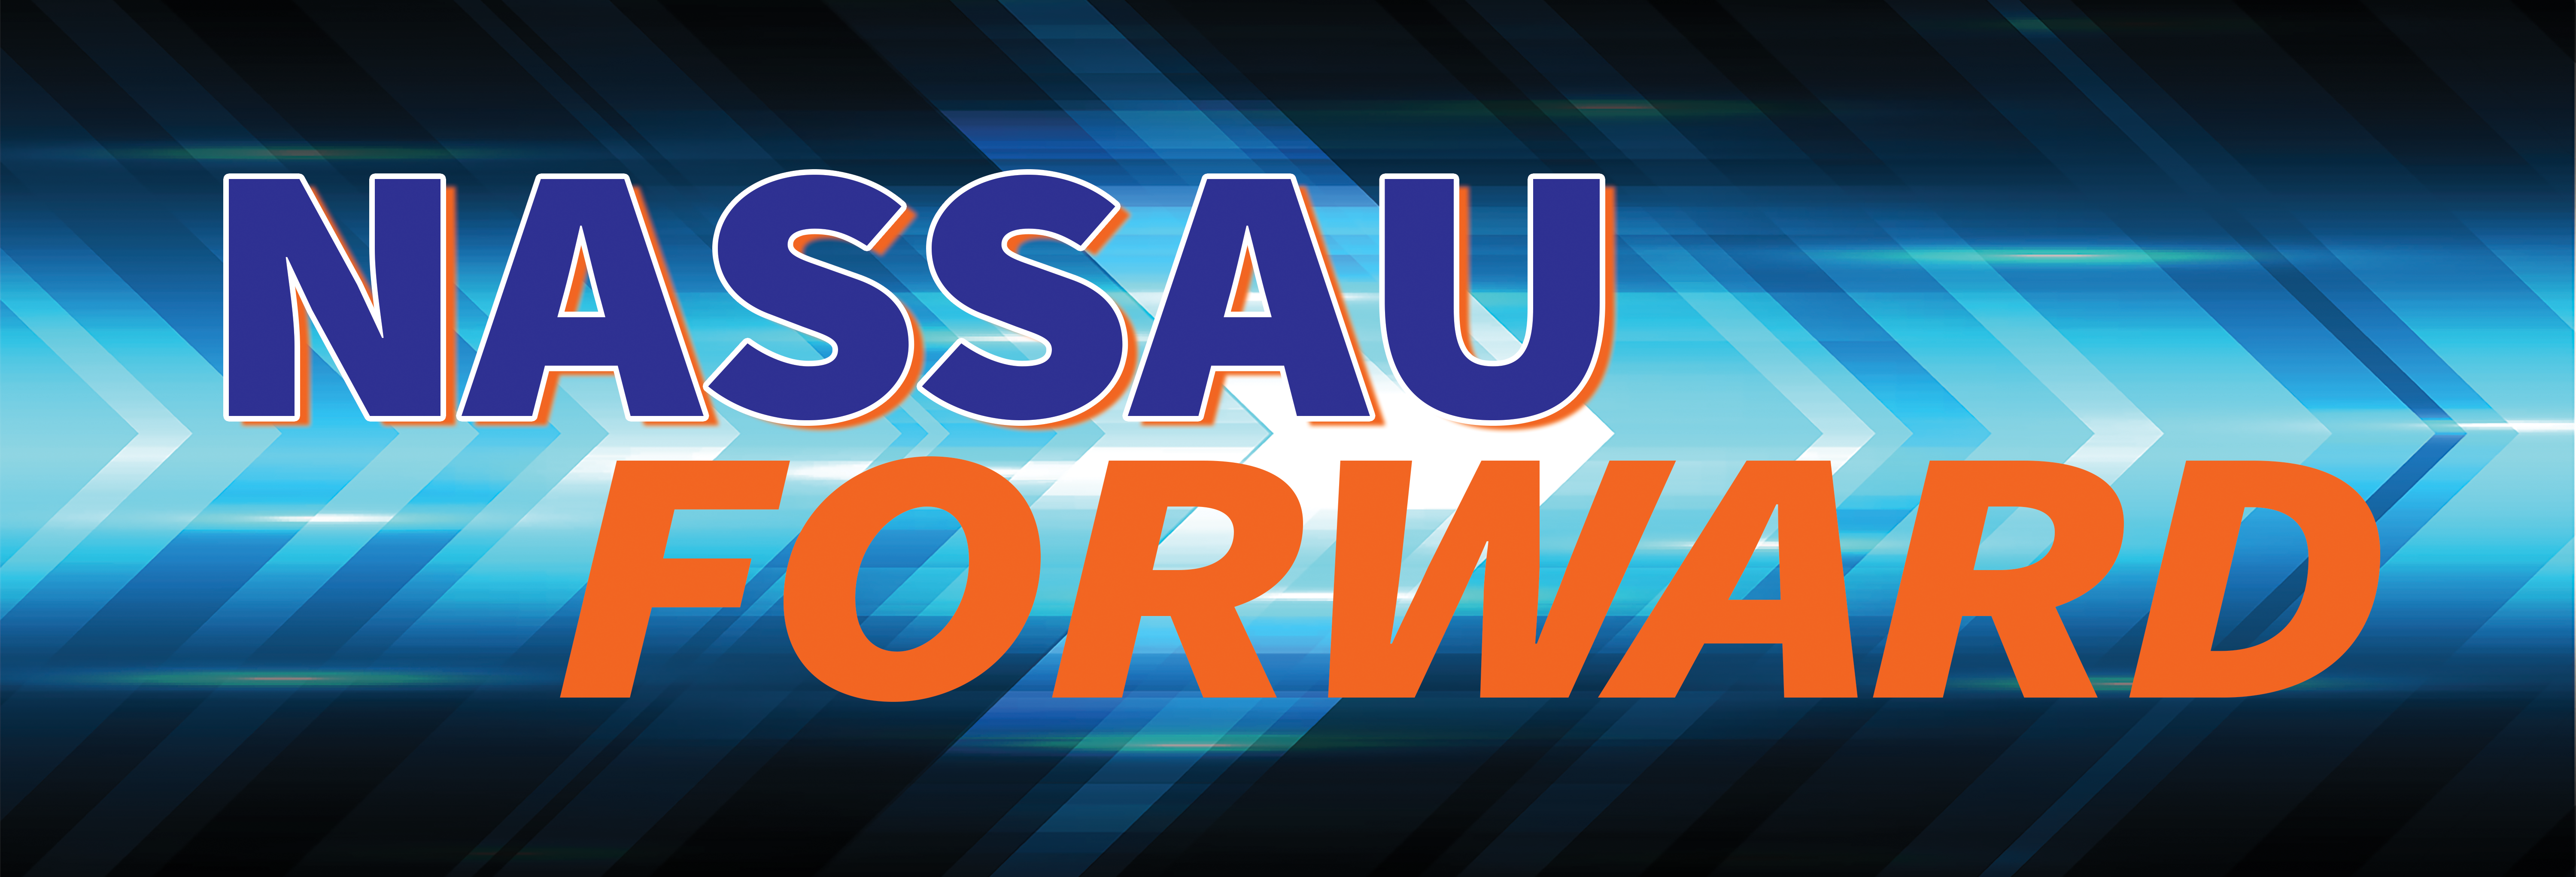 Nassau Forward Logo NEW